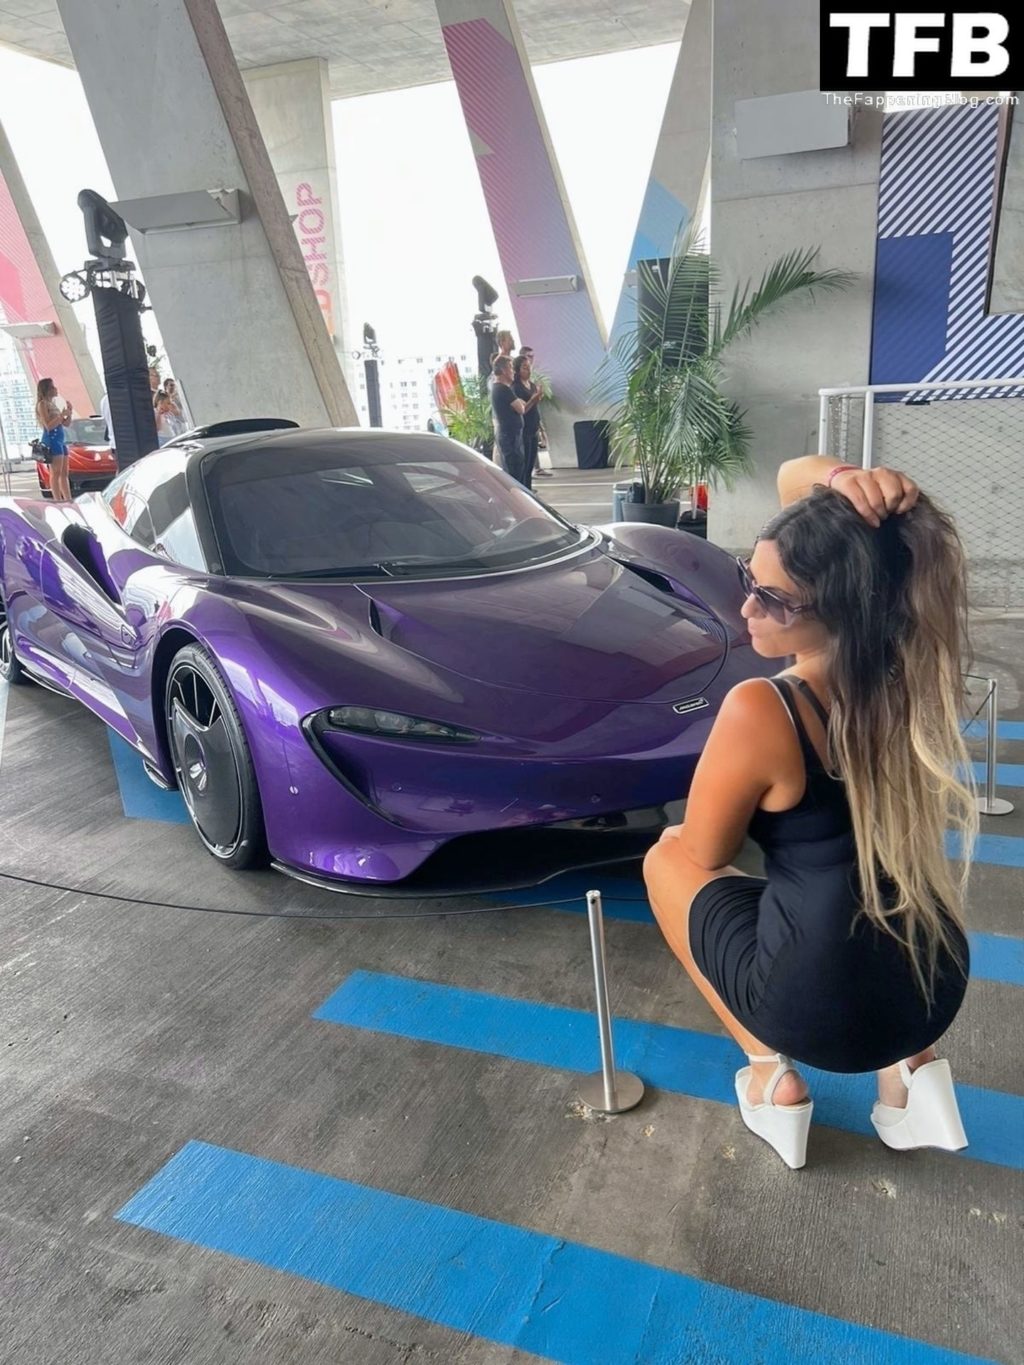 Claudia Romani Attends the F1 McLaren Event in Miami Beach (8 Photos)